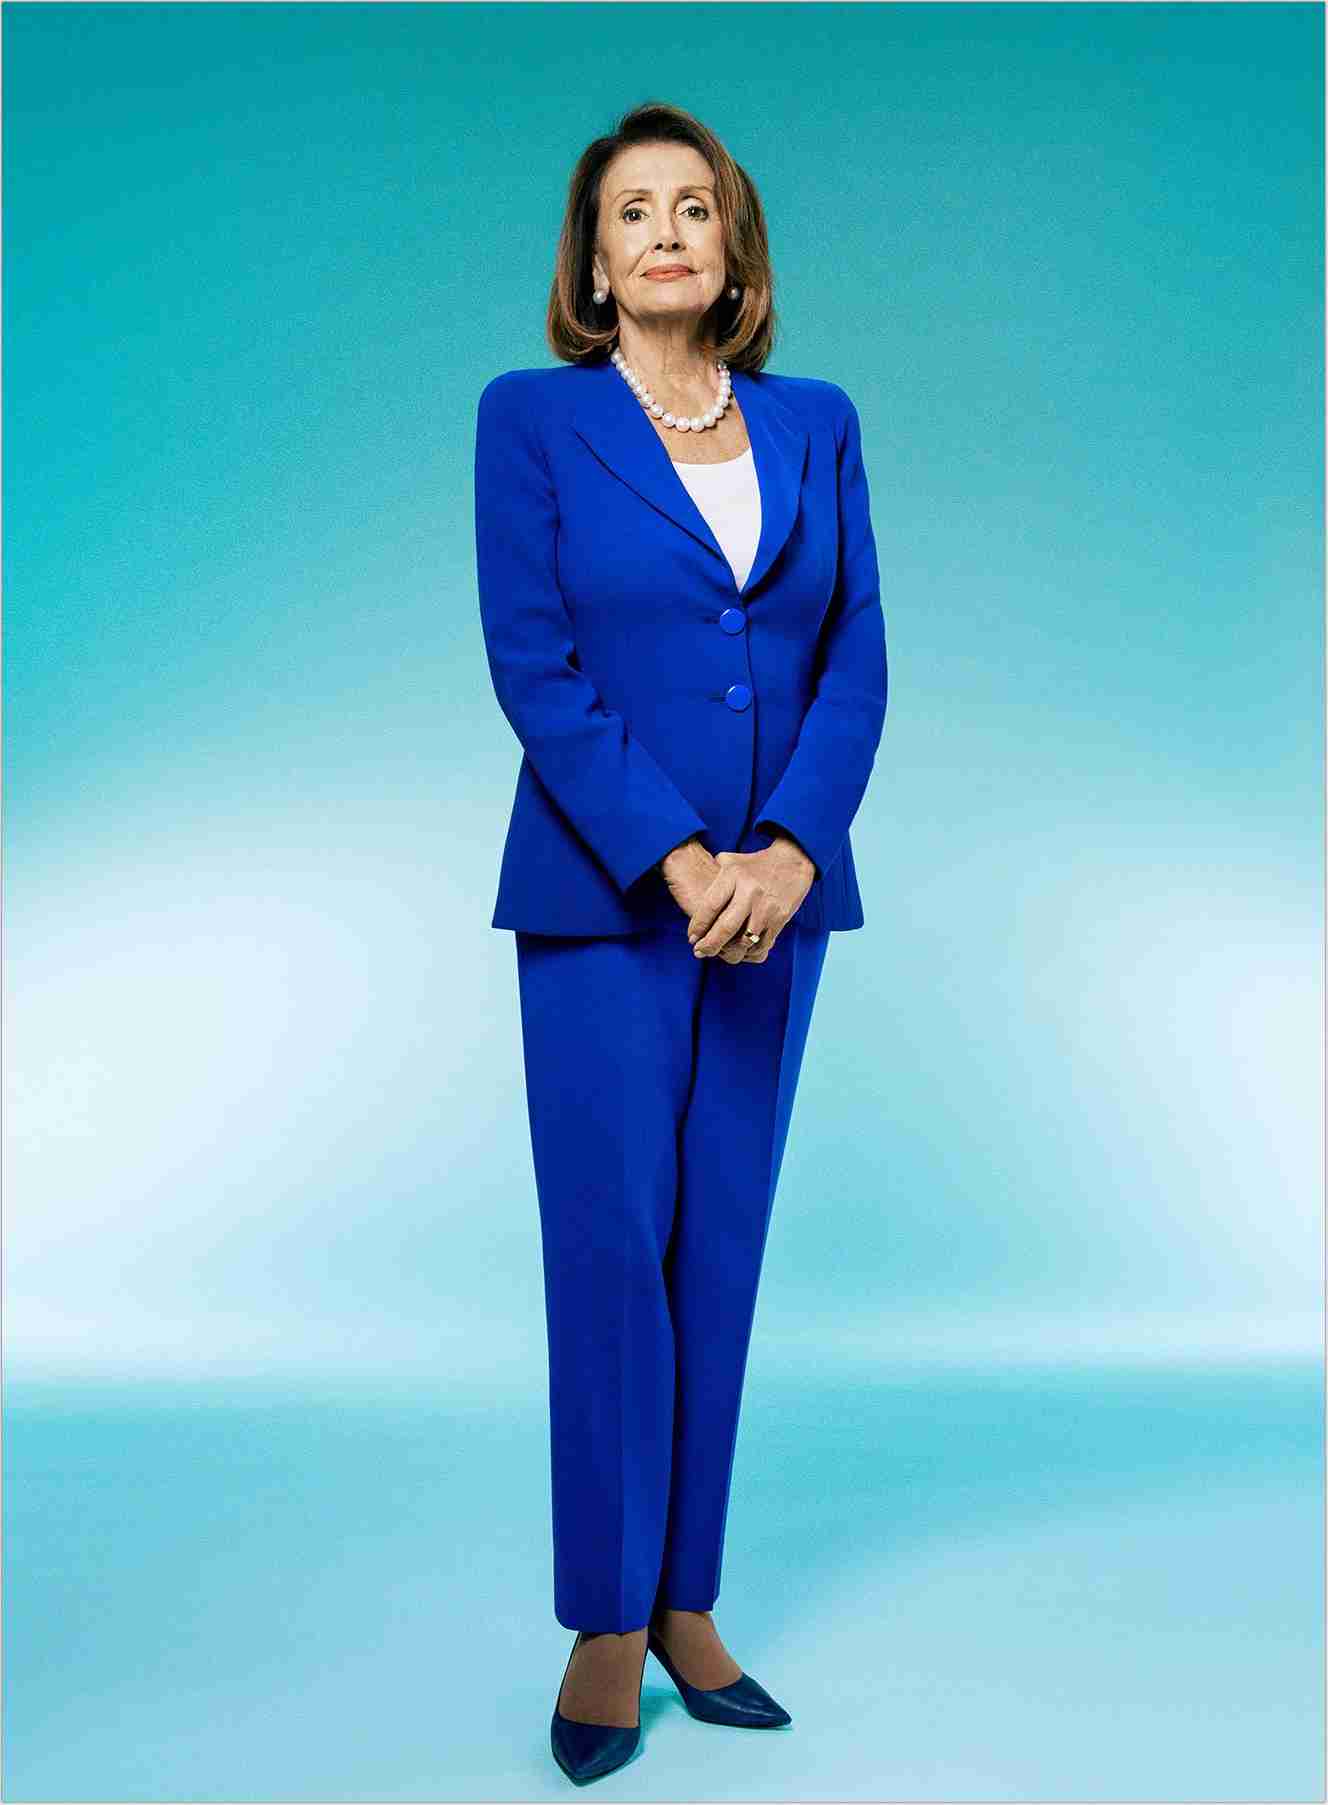 Nancy Pelosi Net Worth, Bio, Height, Family, Age, Weight, Wiki